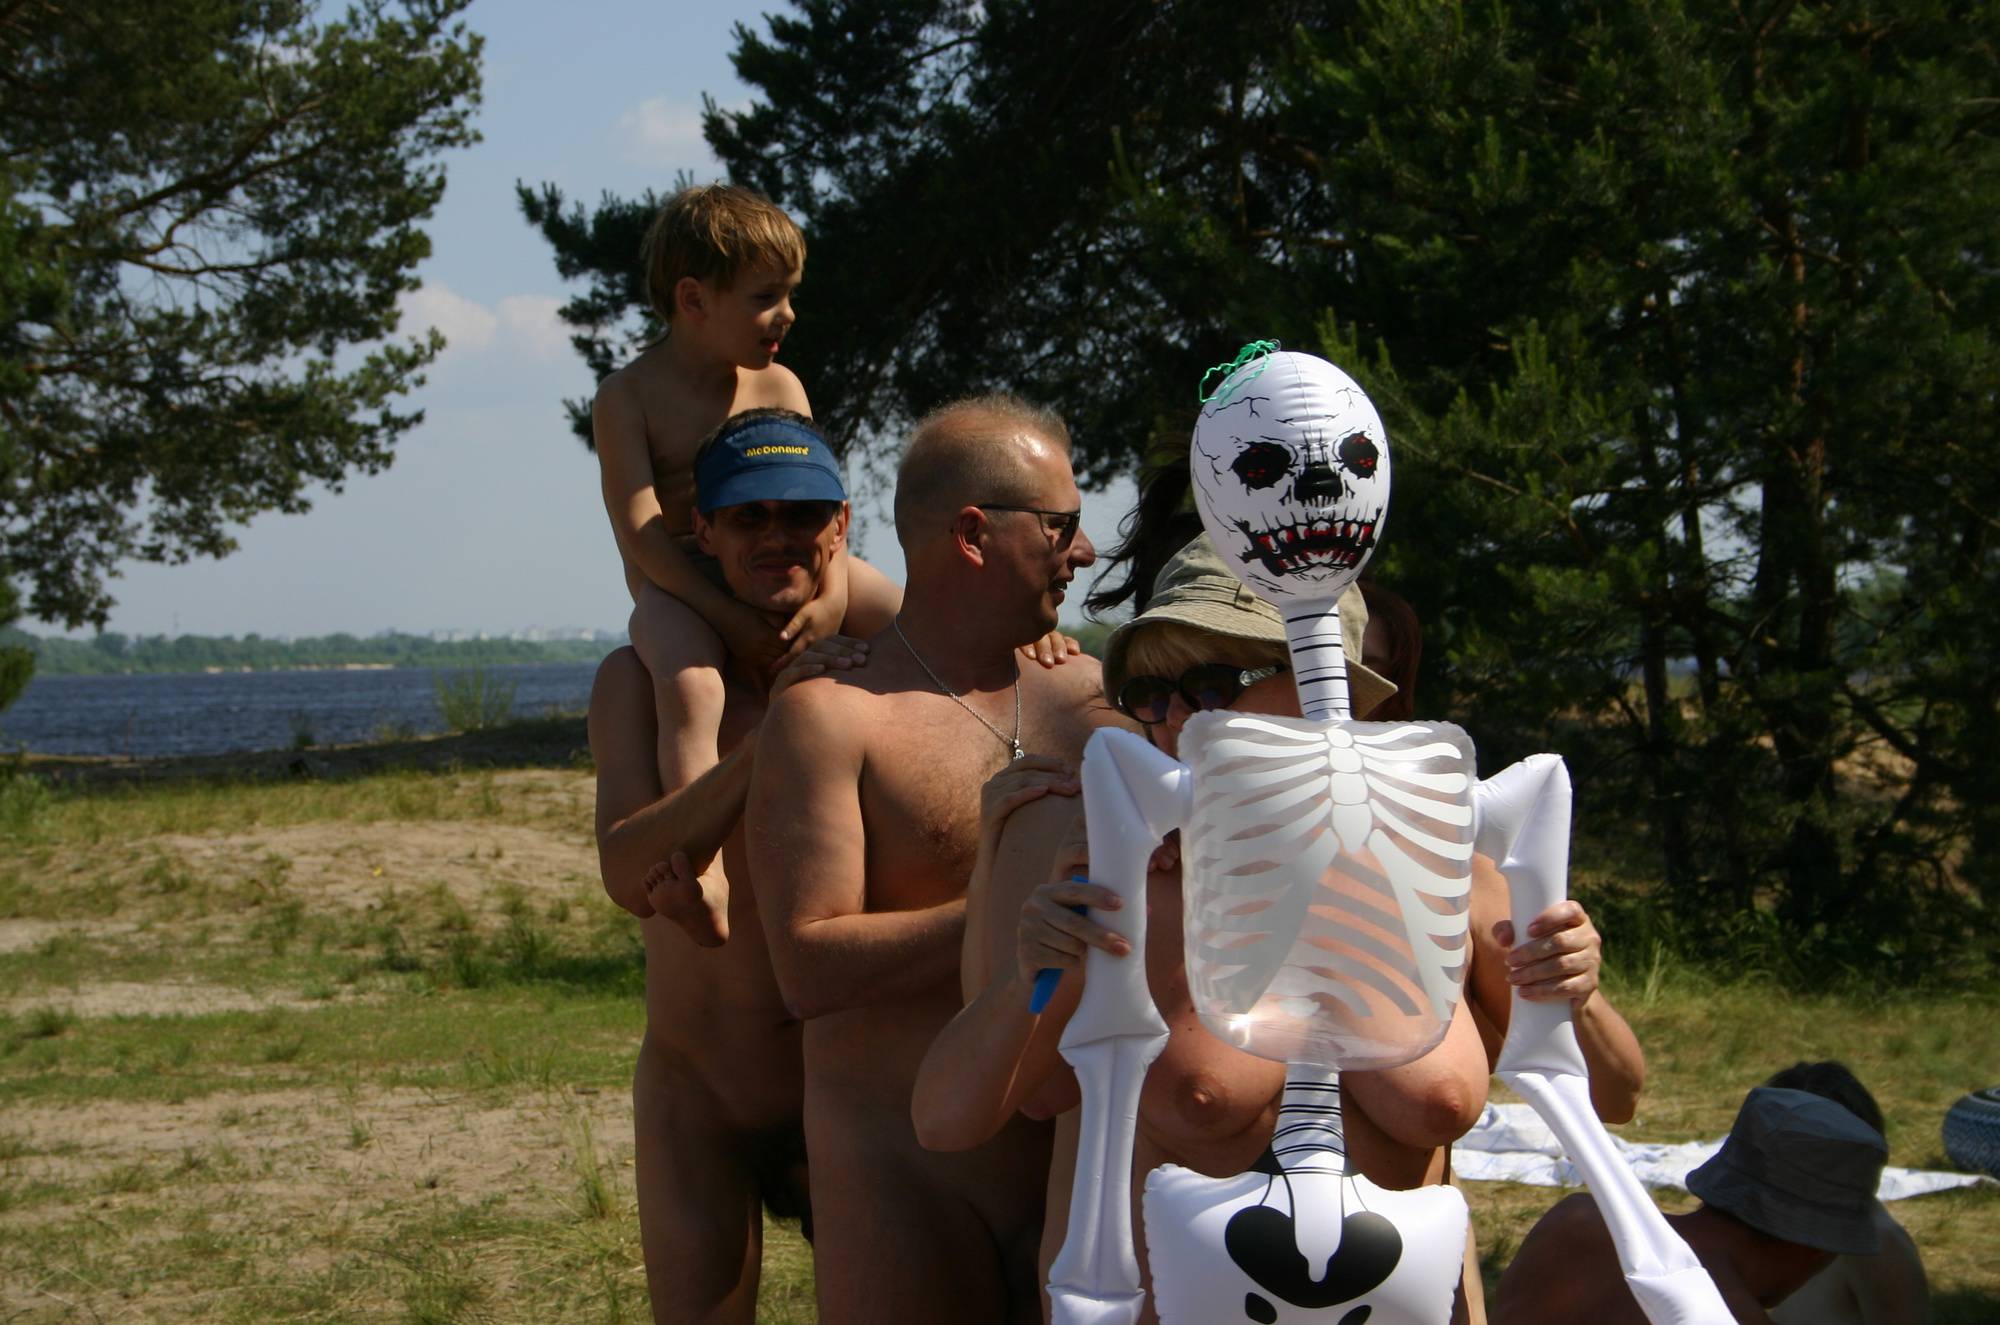 Pure Nudism Photos-Kiev Outdoor Group Game - 2